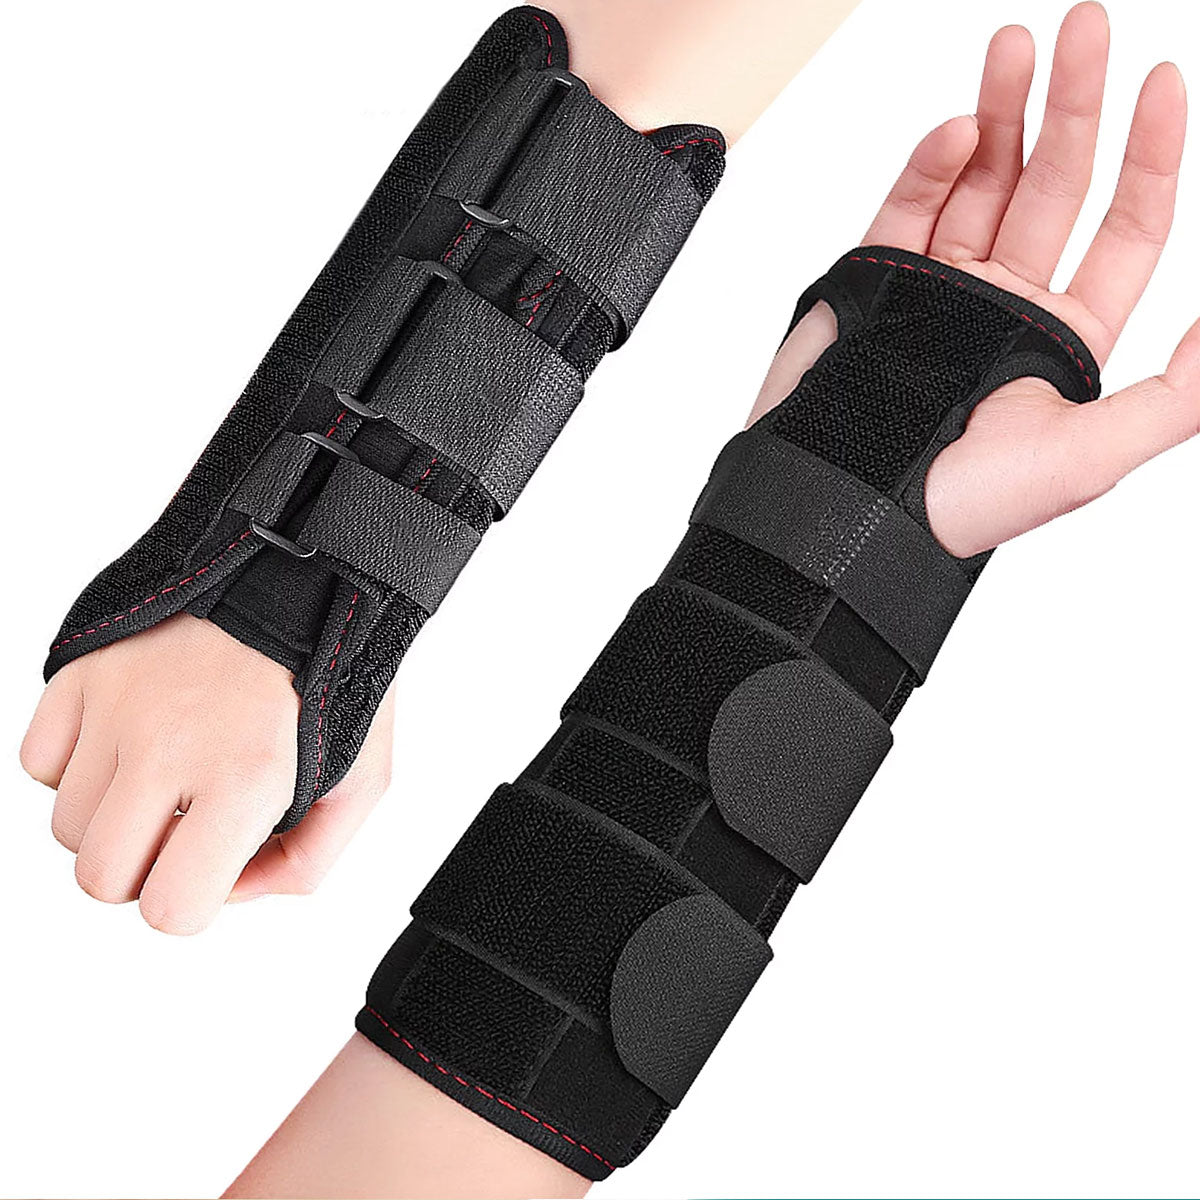 Wrist Support Brace for Carpal Tunnel Adjustable Wrist Splint - Right or Left Hand